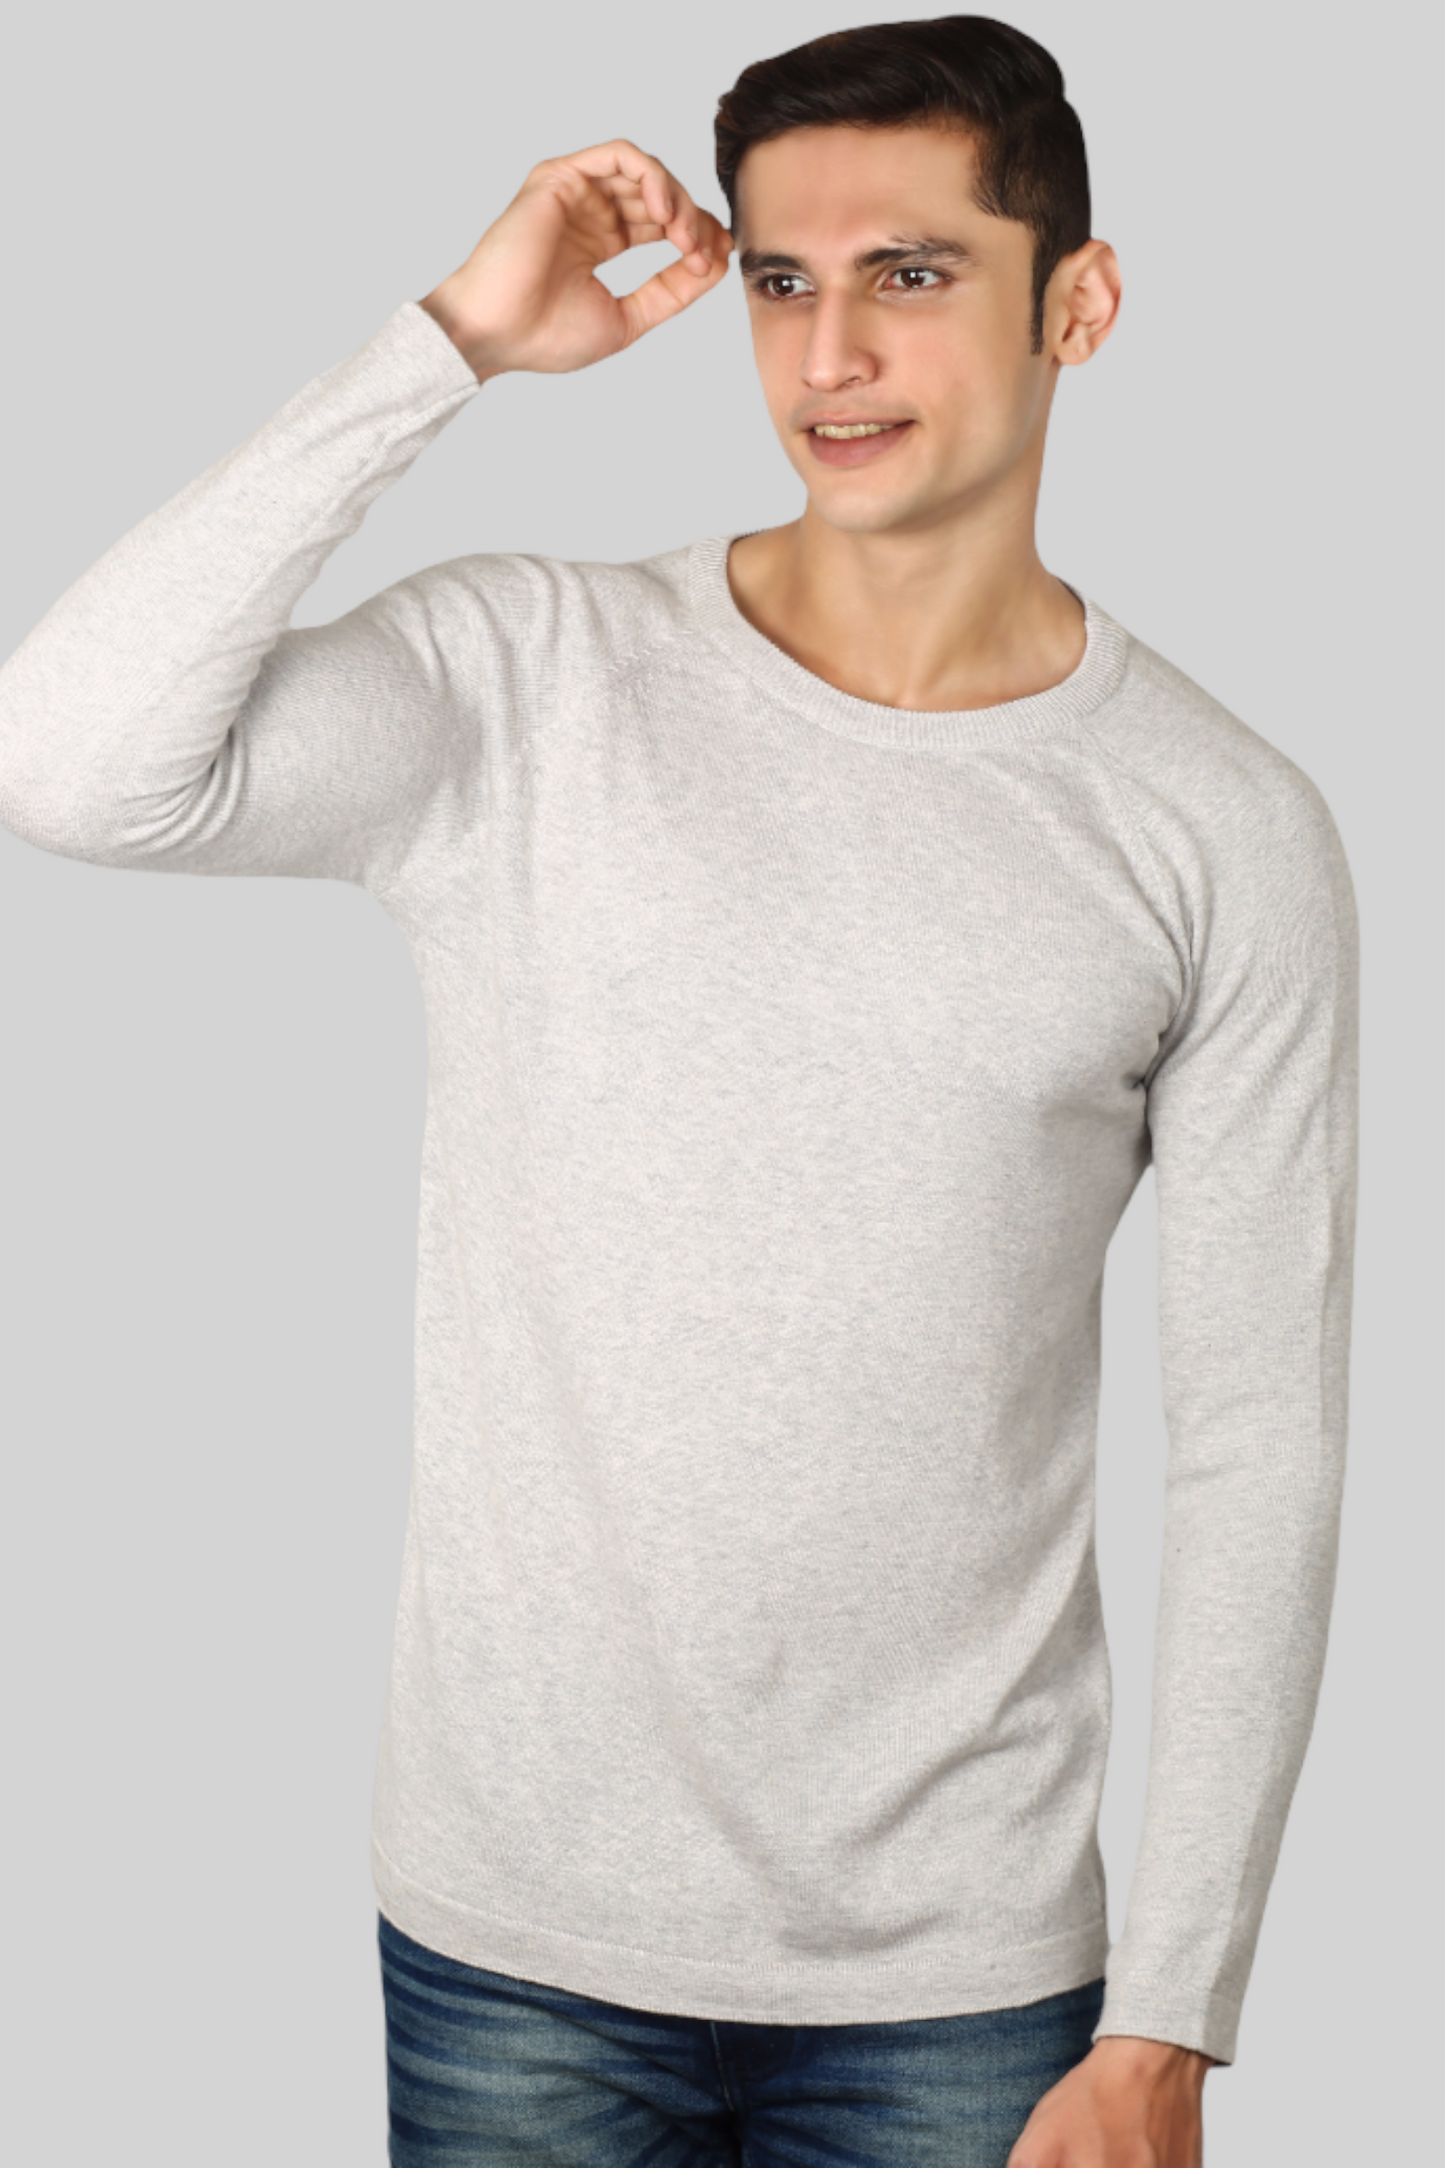 Acru Flat Knit Full Sleeve T-shirt